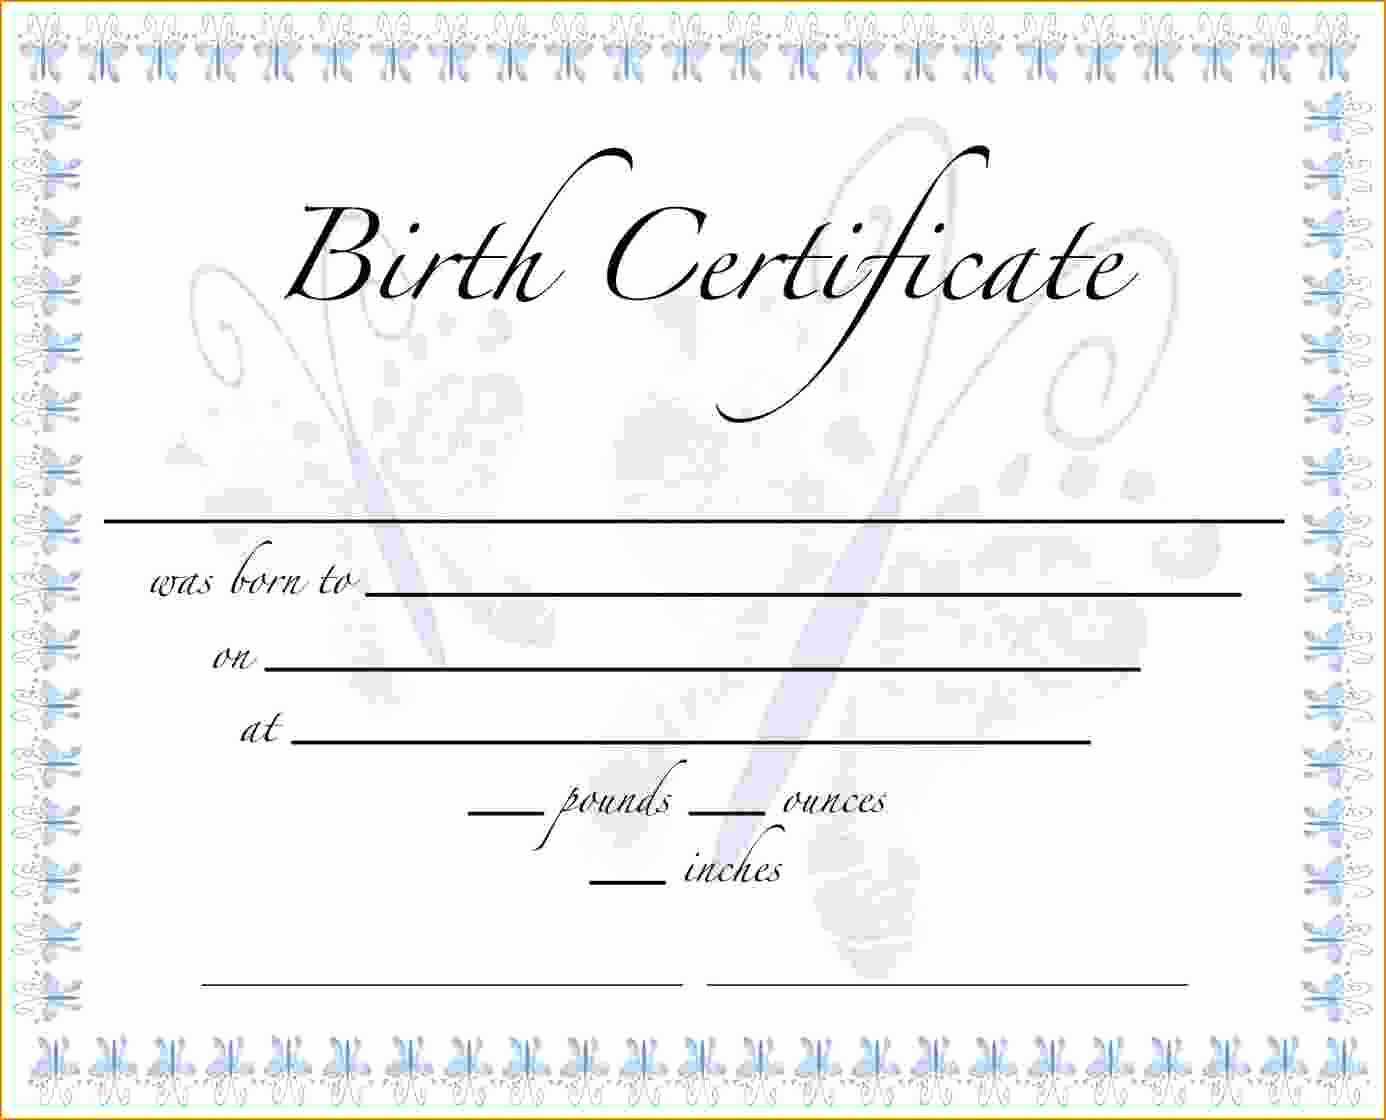 German Birth Certificate Template - Karan.ald2014 With Birth Certificate Template For Microsoft Word